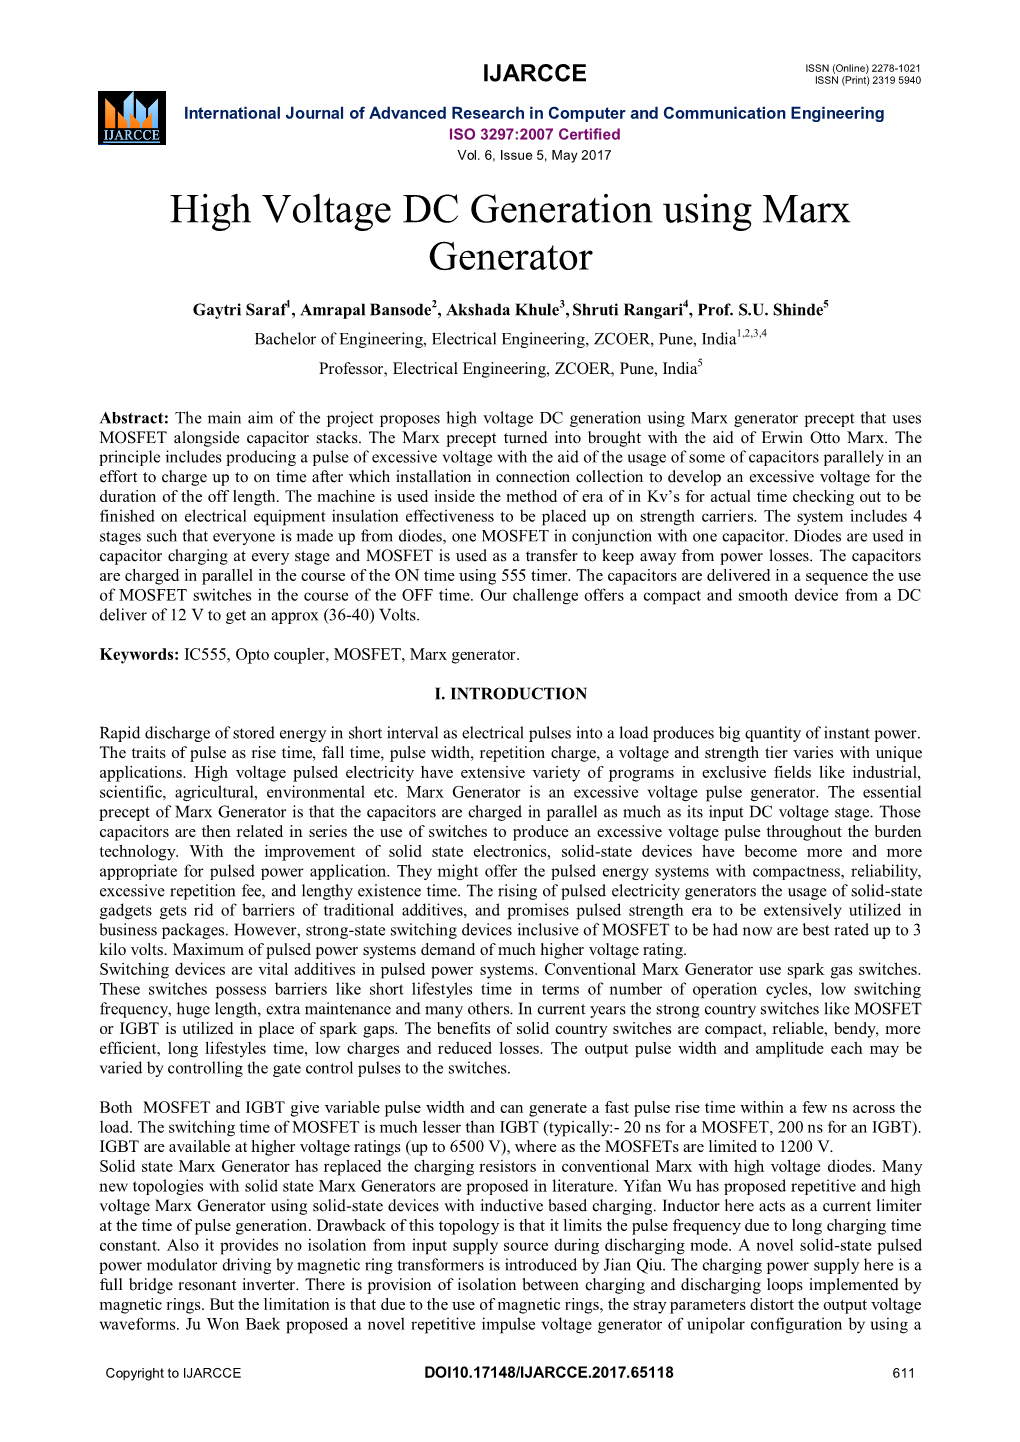 High Voltage DC Generation Using Marx Generator